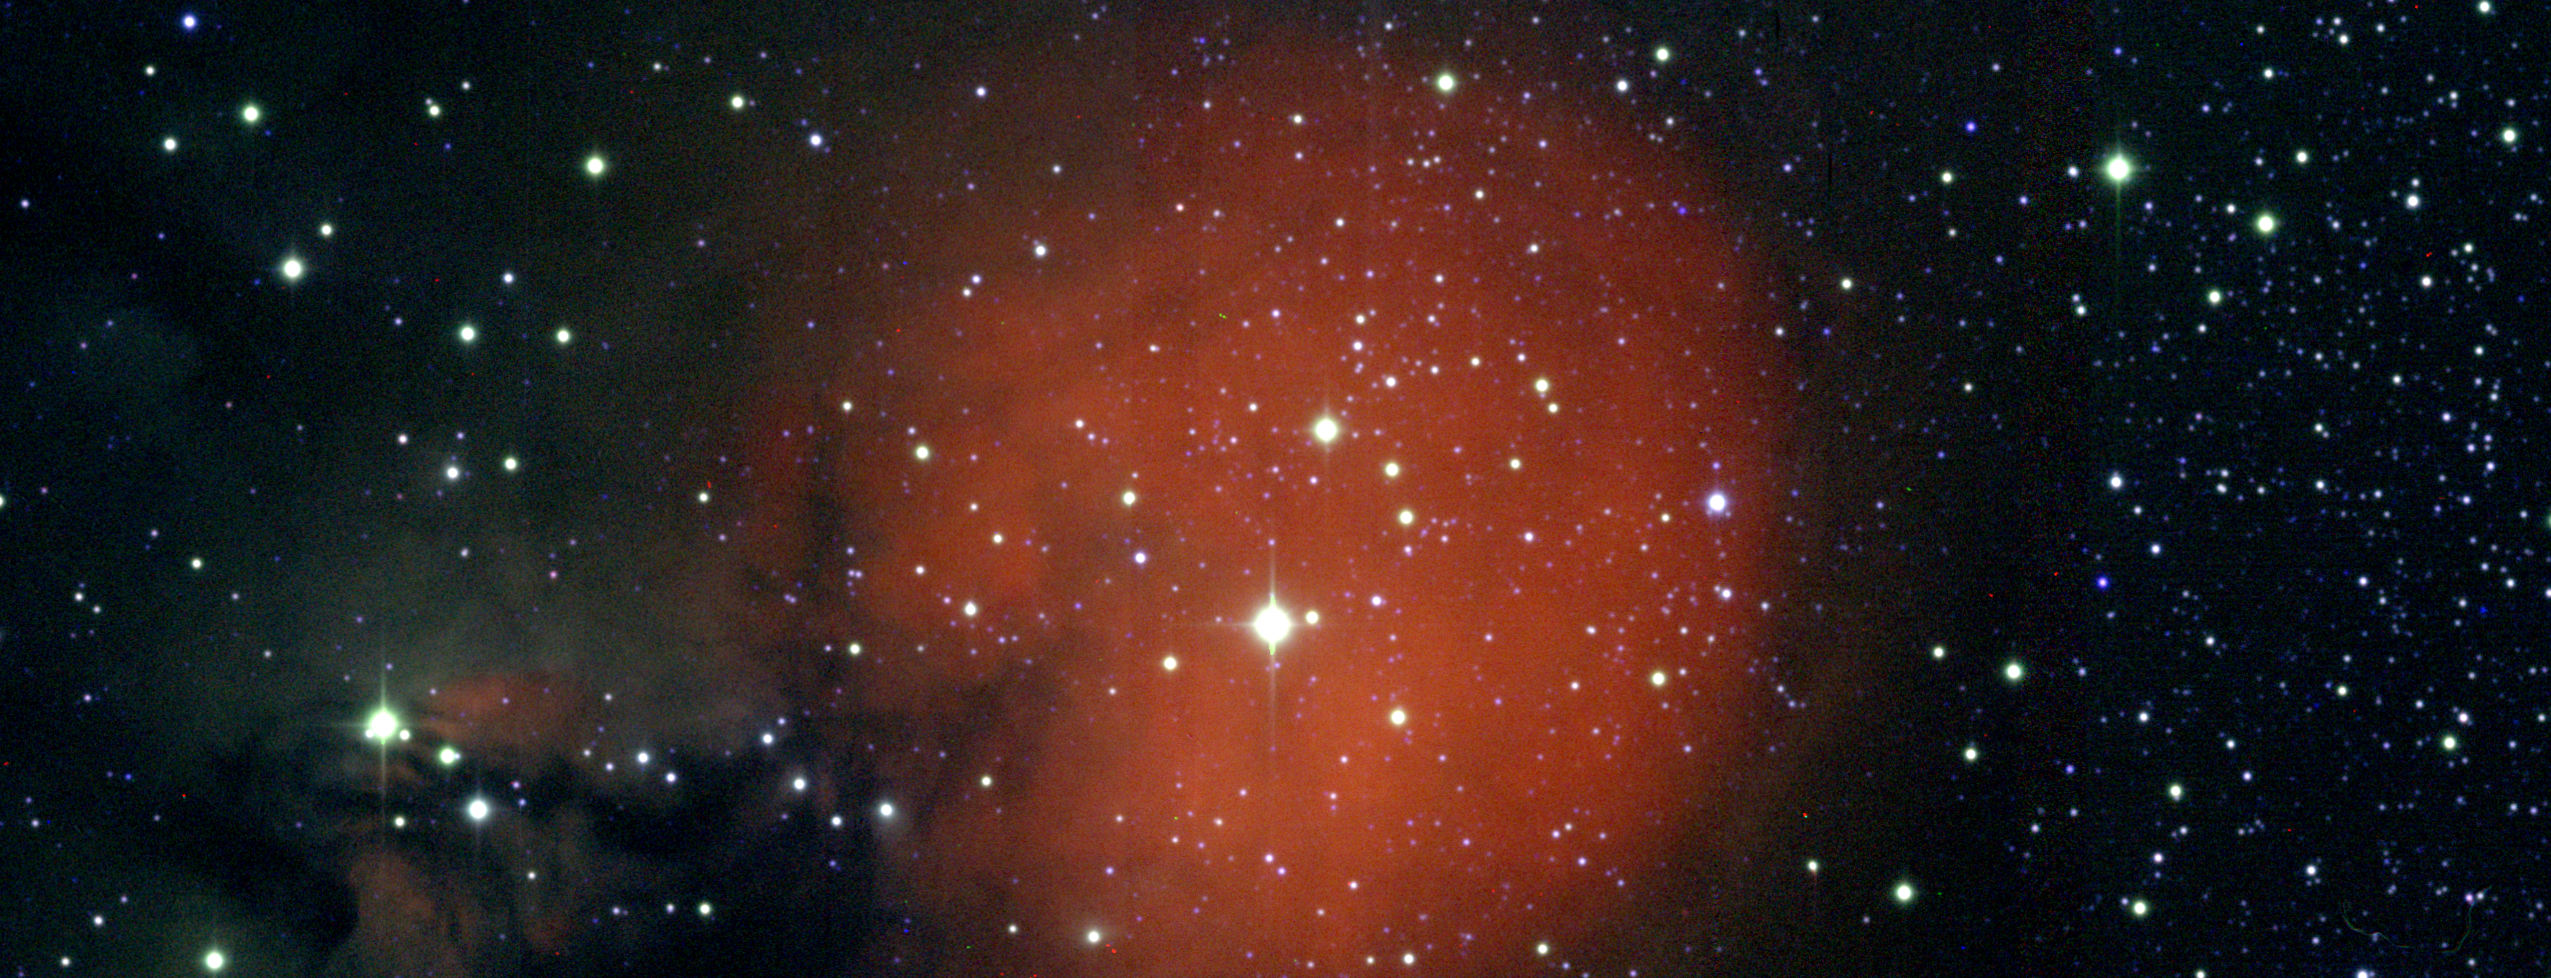 Star-forming region Sh2-82 in IPHAS